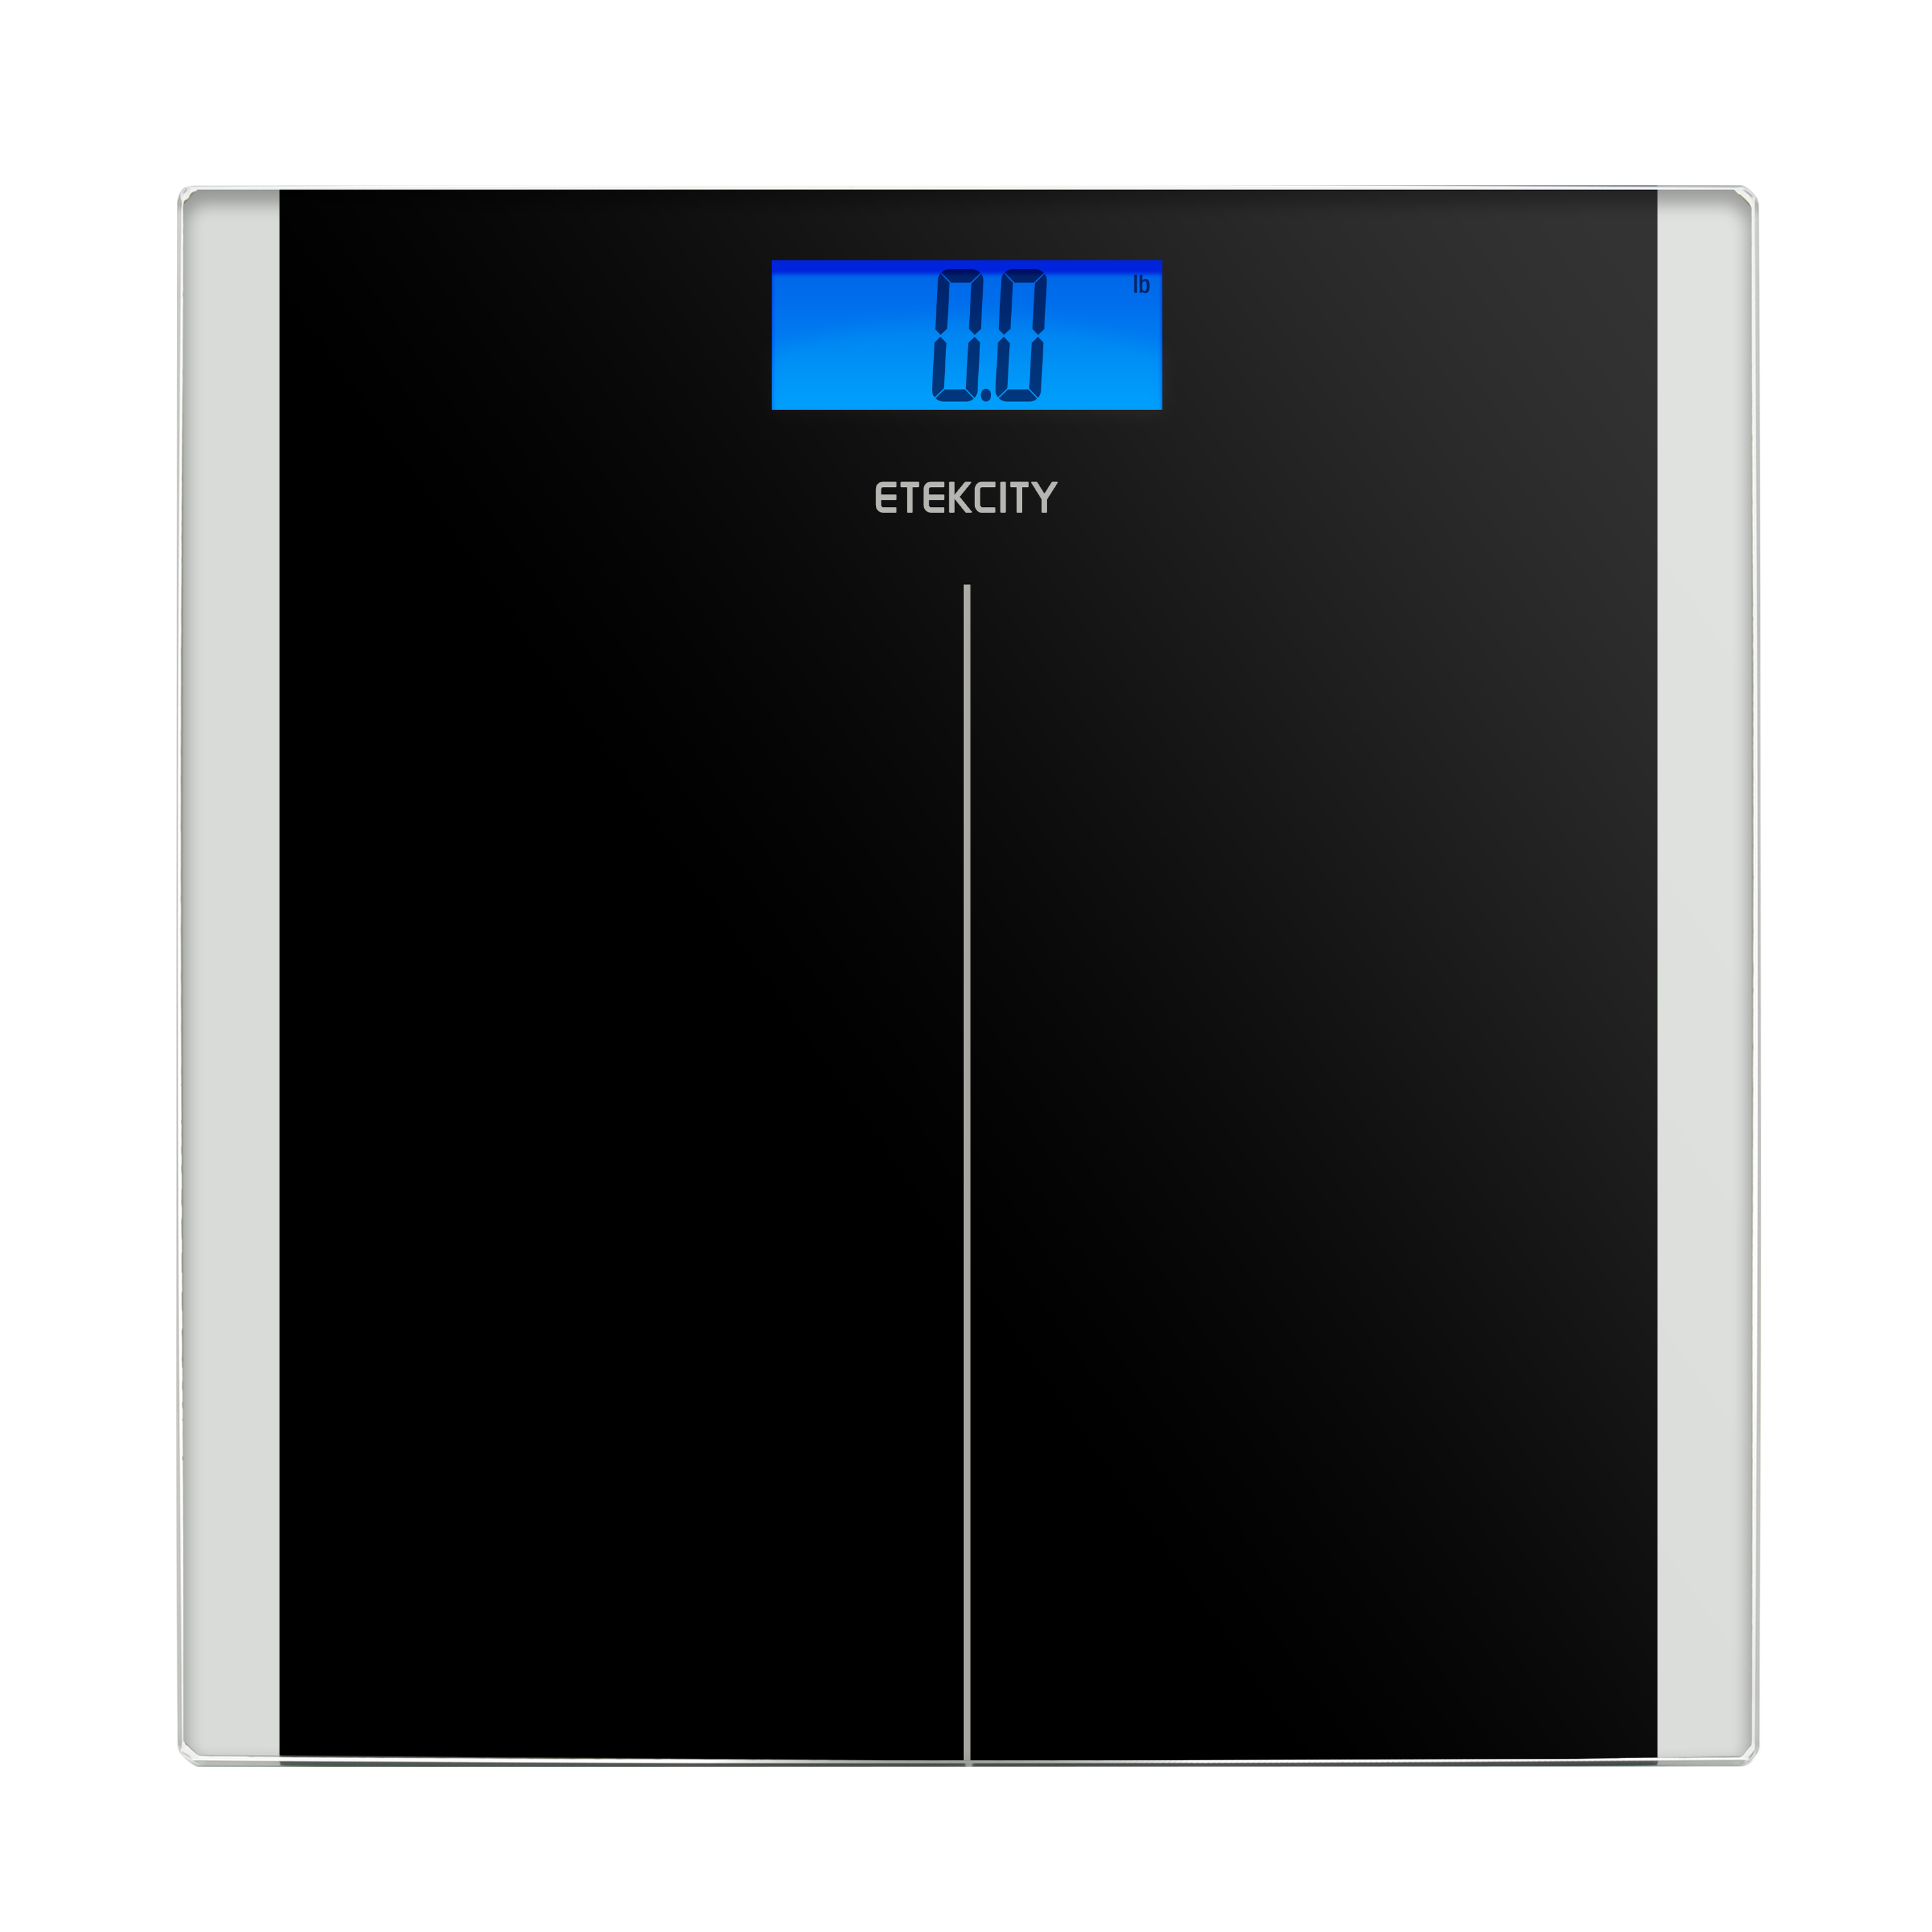 Etekcity EB4887S Digital Body Weight Scale